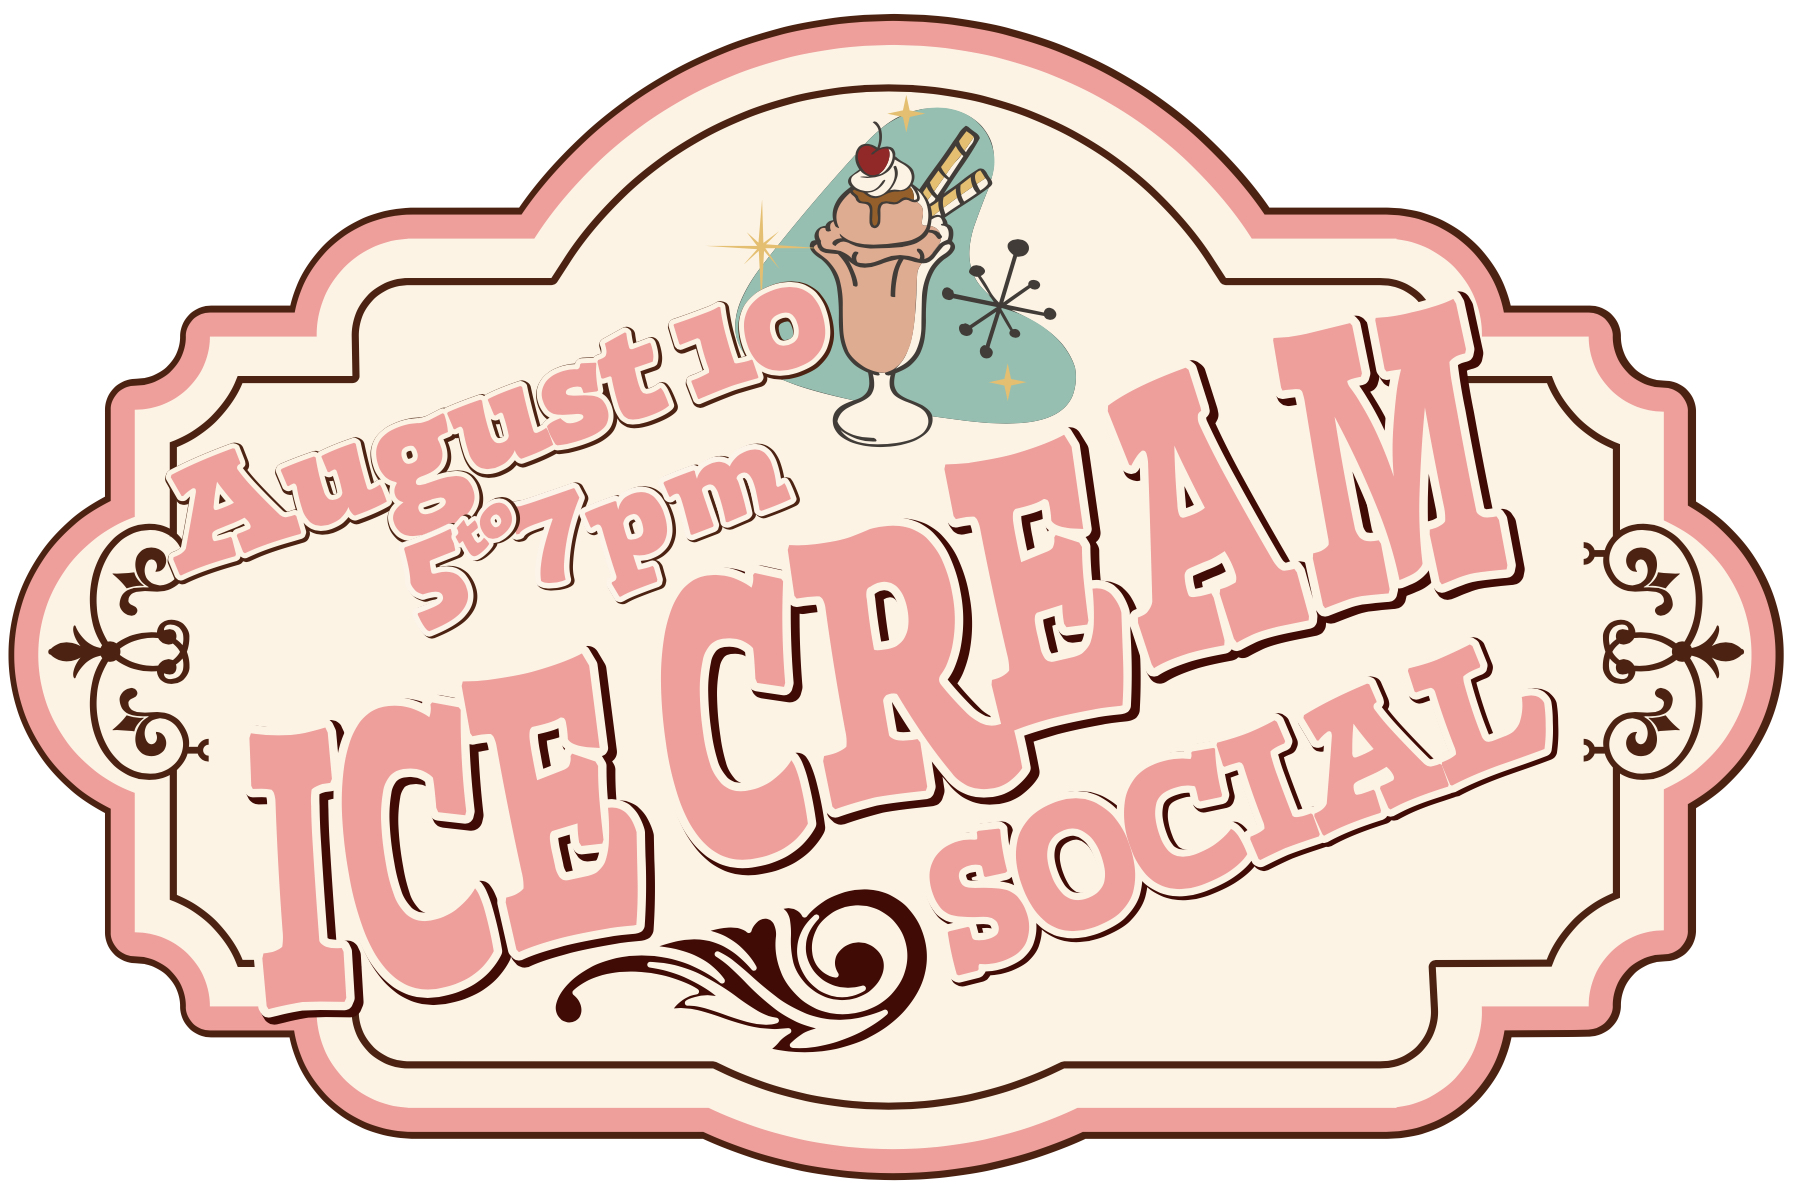 Ice cream social